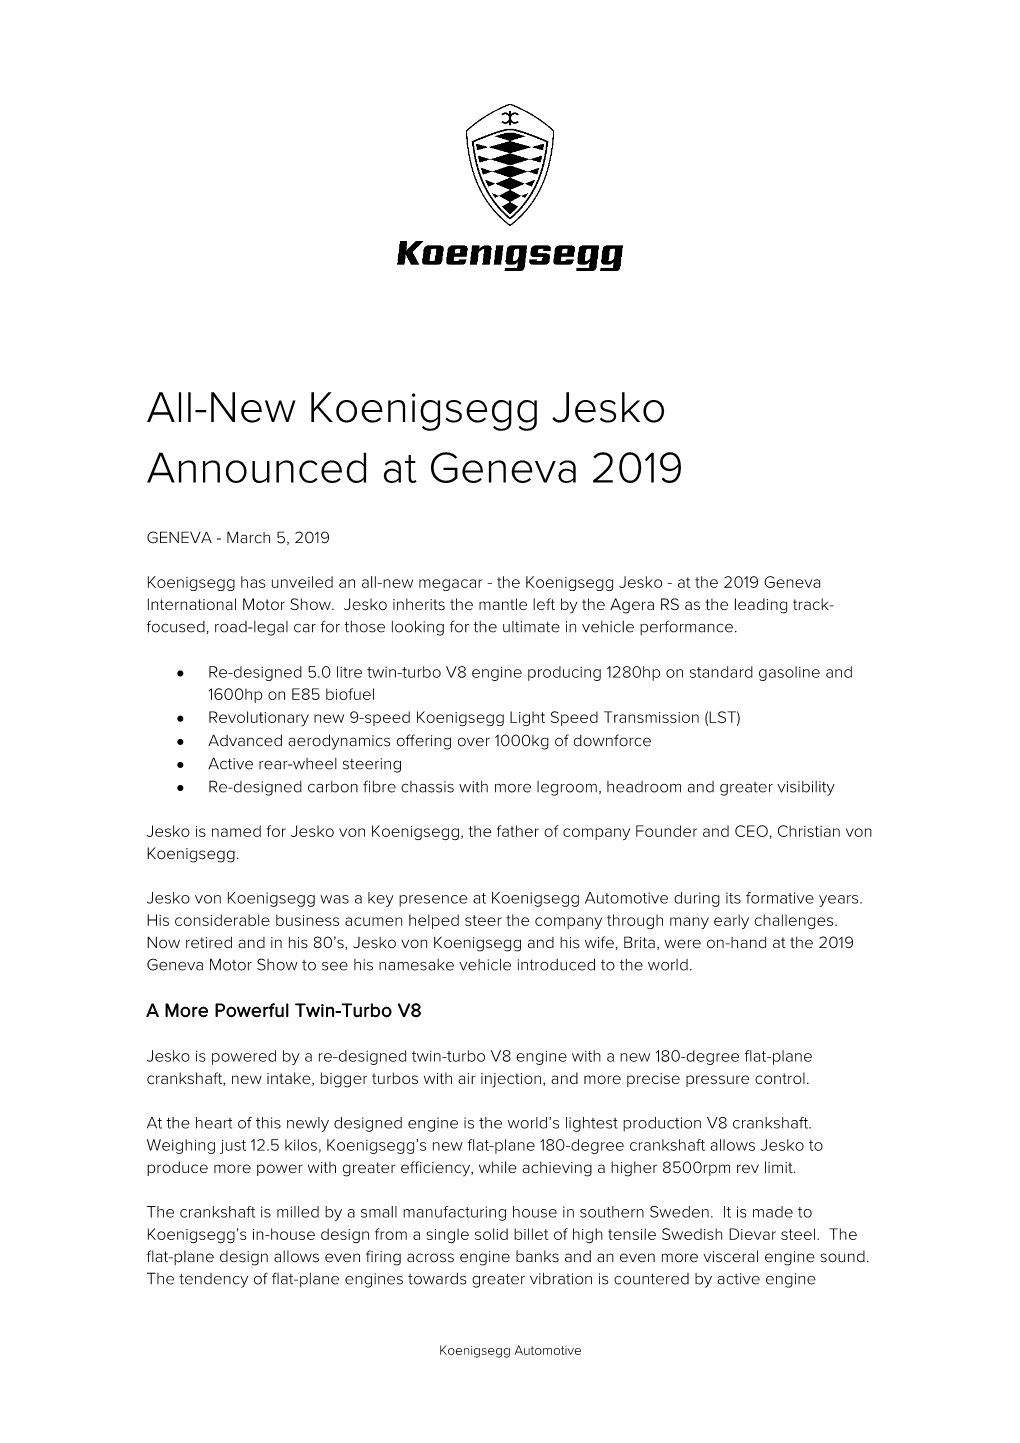 Koenigsegg Jesko Announced at Geneva 2019